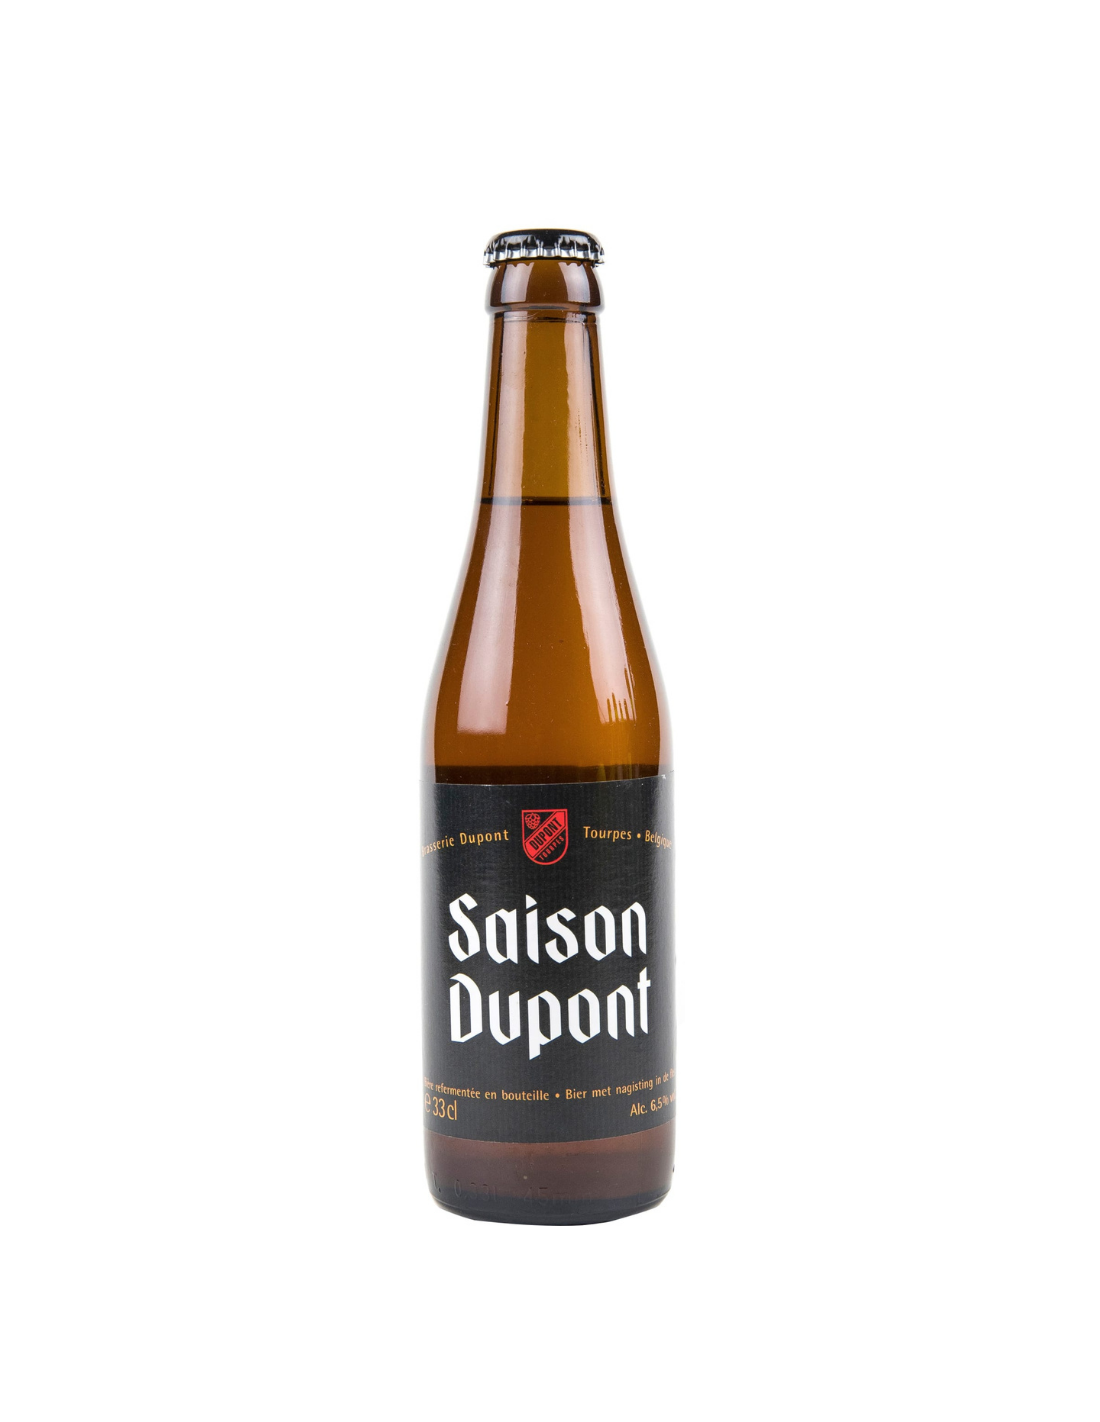 Bere blonda Saison Dupont, 6.5% alc., 0.33L, Belgia alcooldiscount.ro